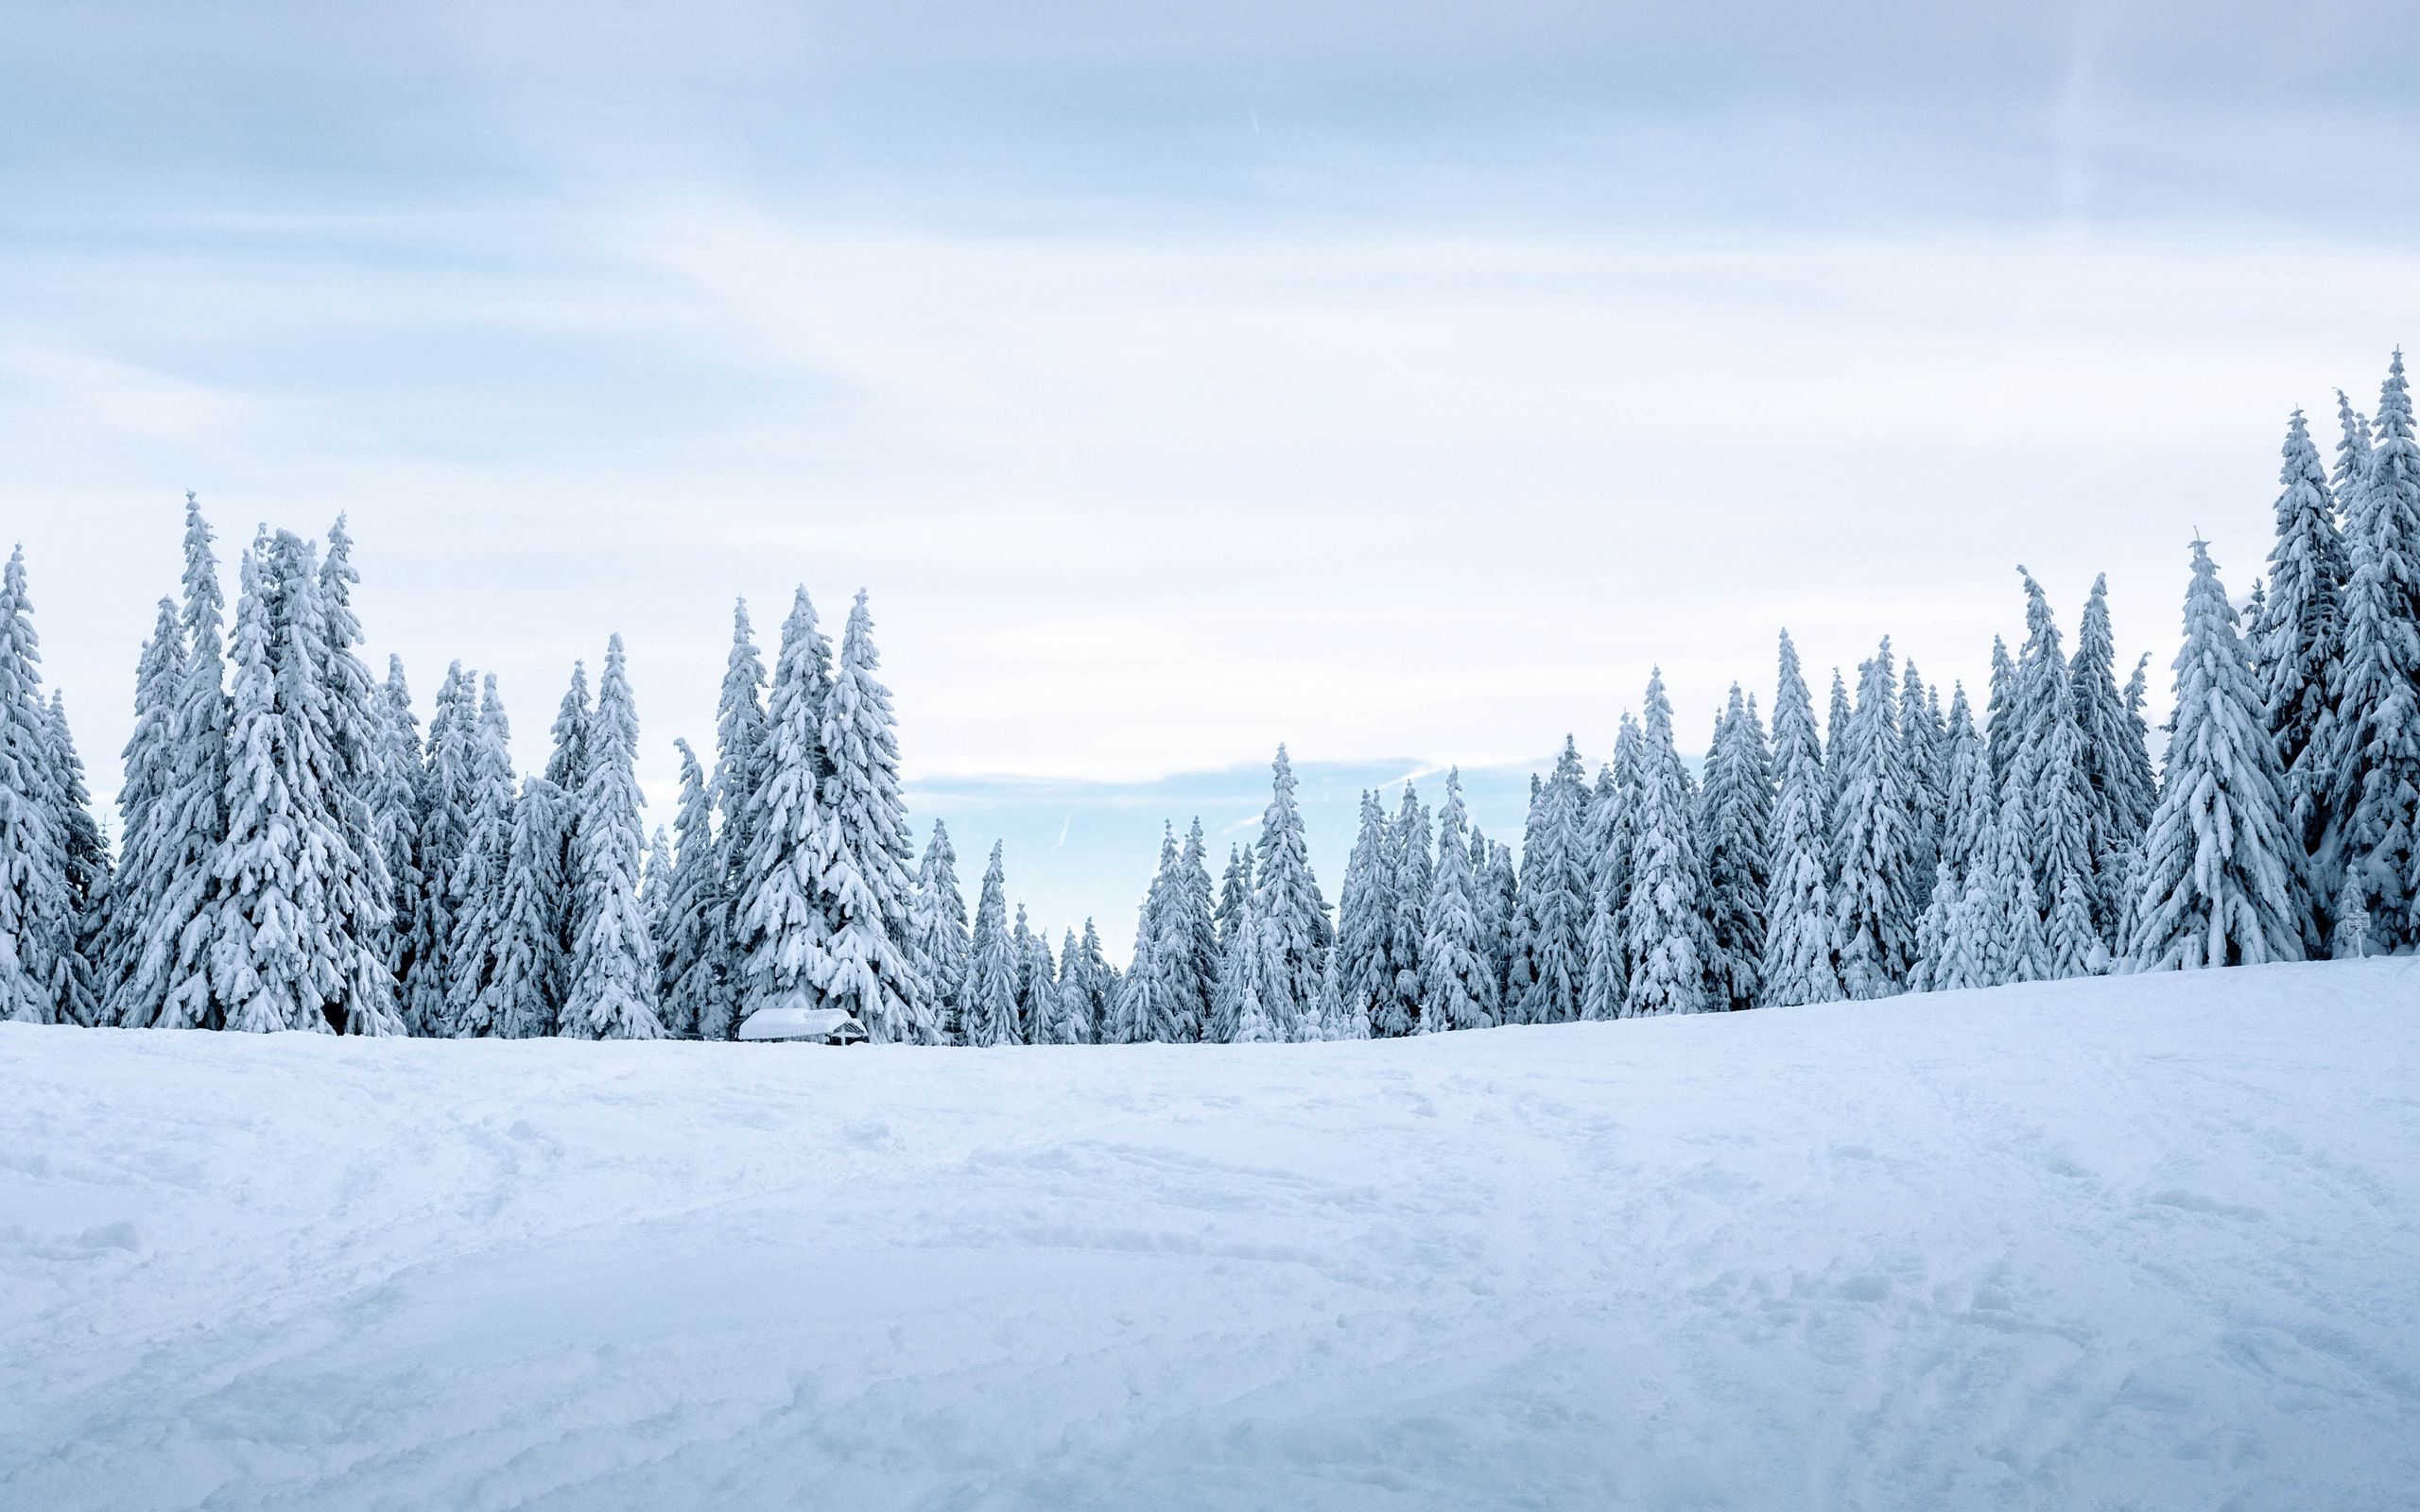 Download wallpaper 2560x1600 snow, winter, trees, winter landscape, snowy widescreen 16:10 HD background